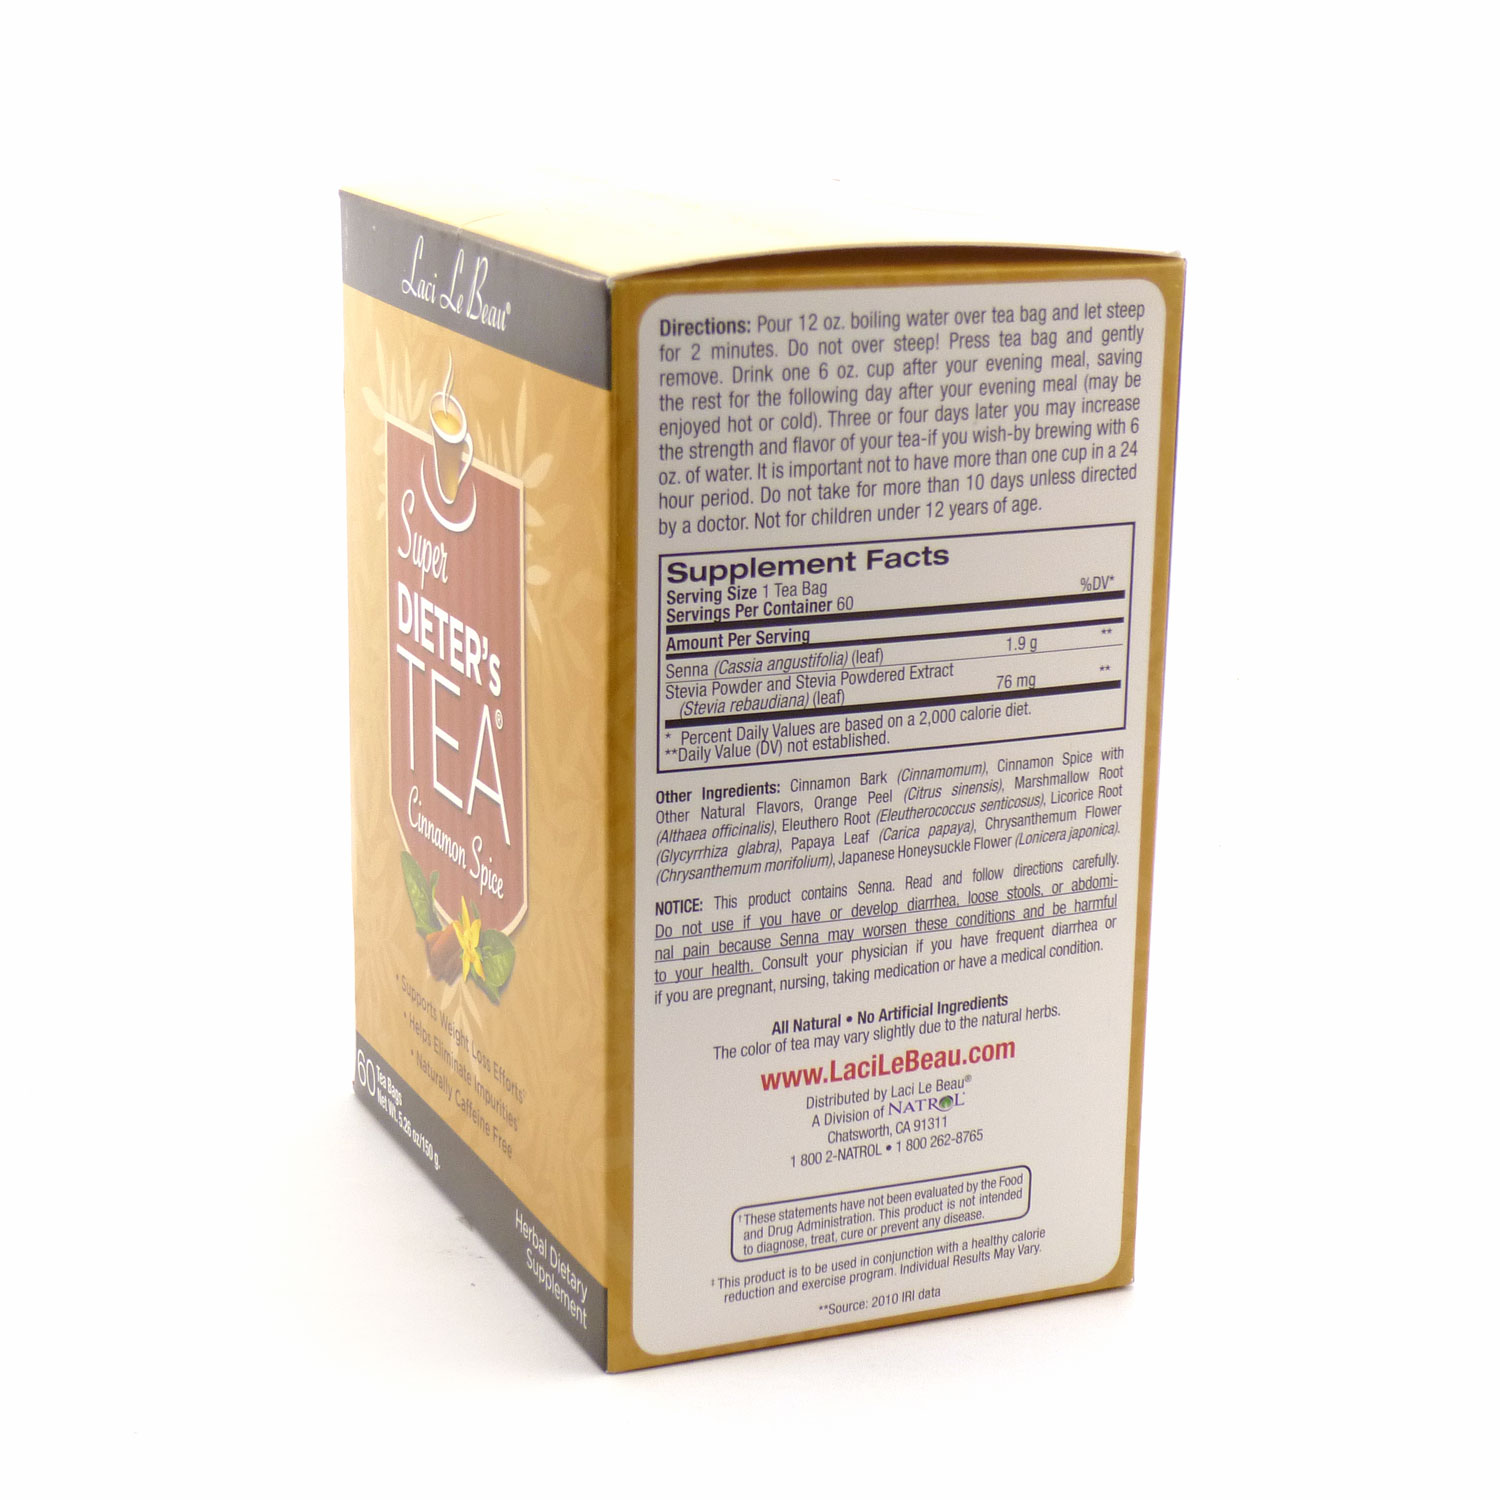 Laci Le Beau Super Dieter'S Tea Cinnamon Spice, 60 Tea Bags - image 2 of 2